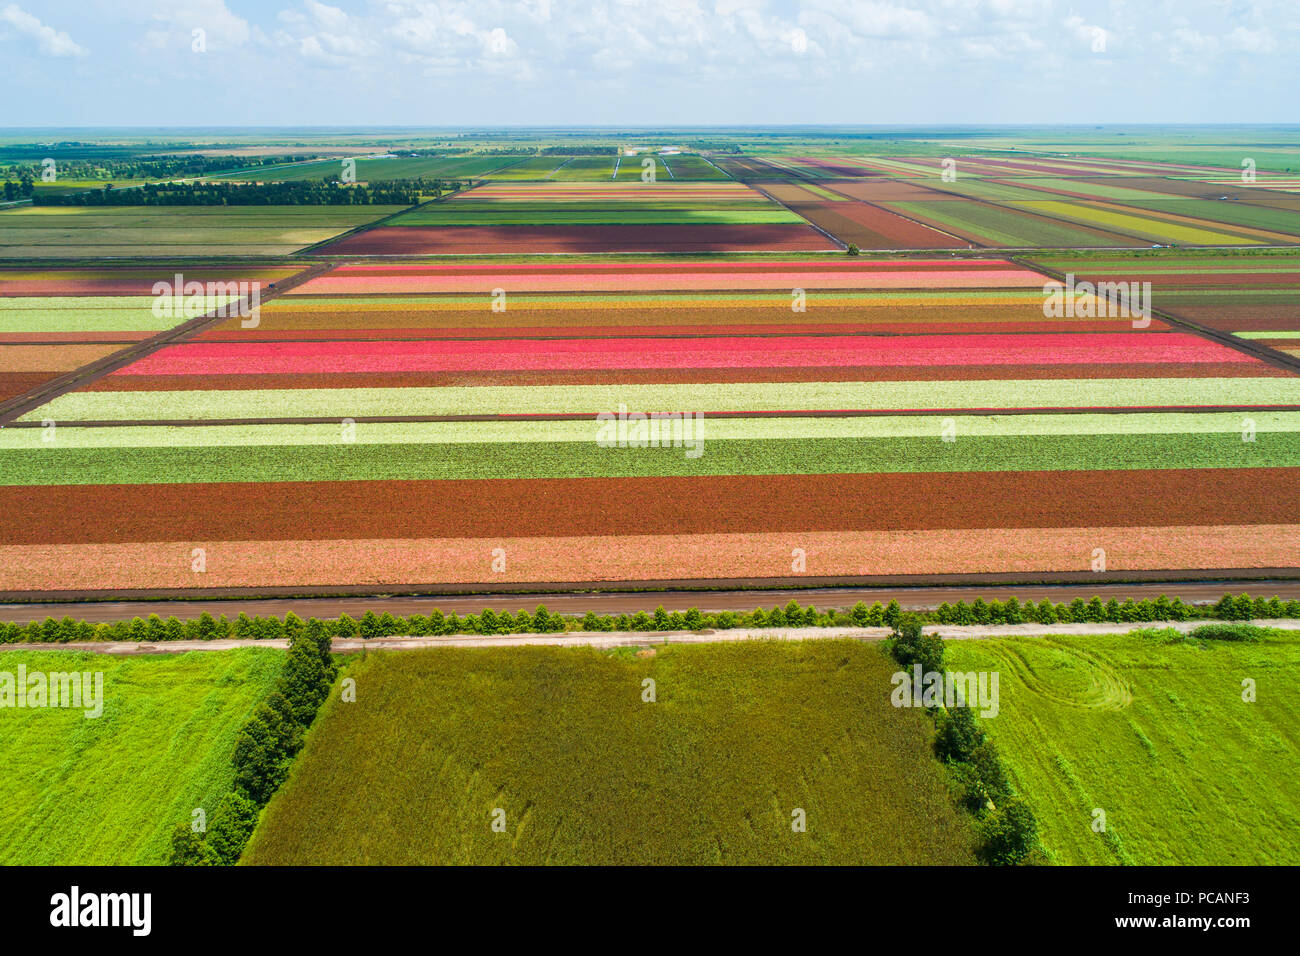 Die bunte Welt berühmten caladium Blumenanbau Felder in Lake Placid Florida liefert 90 % des weltweiten Lieferung von caladium Blumen Stockfoto